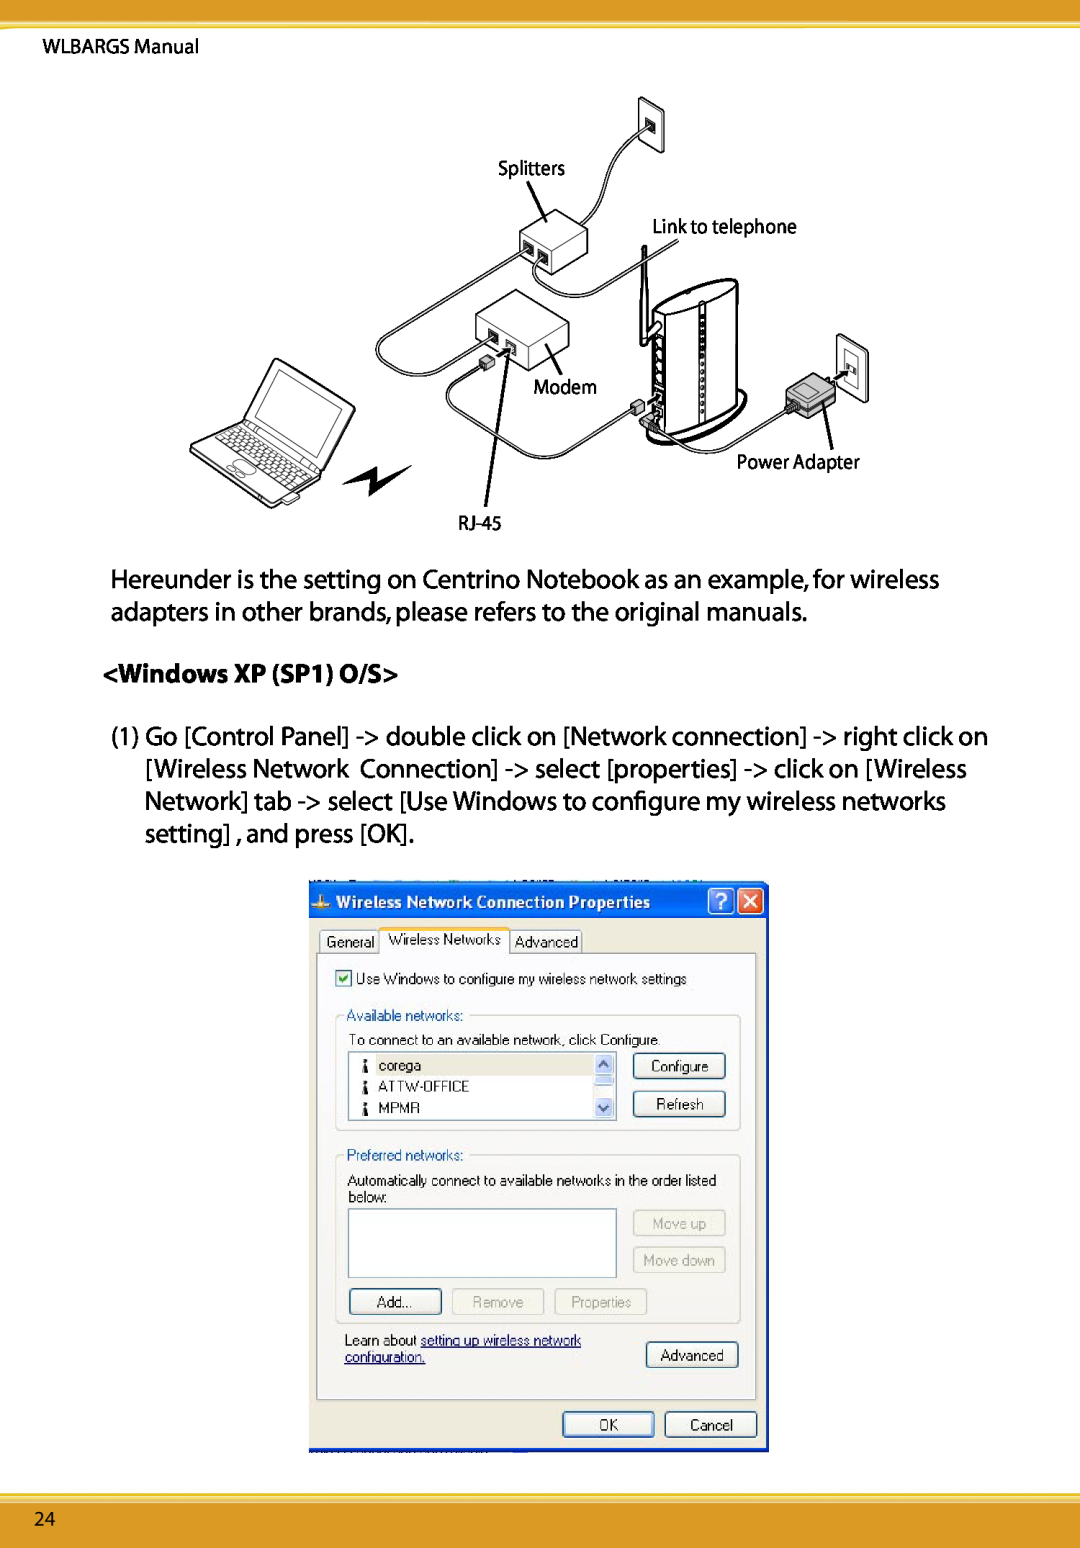 Allied Telesis CG-WLBARGS manual Windows XP SP1 O/S 